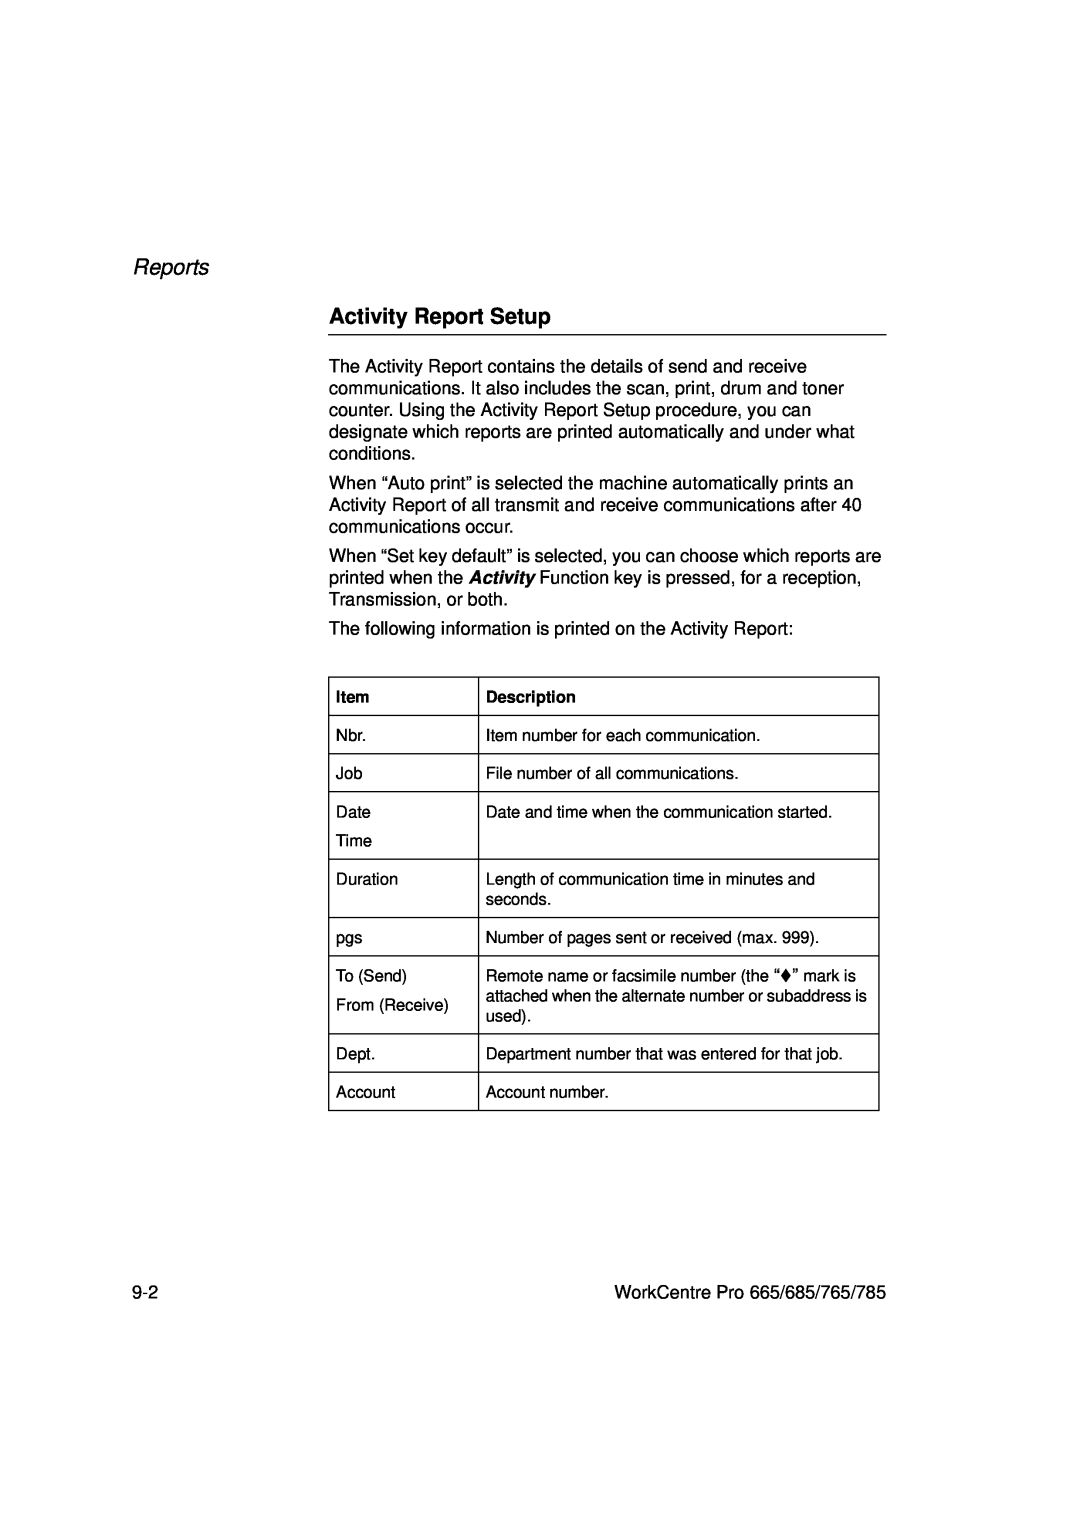 Xerox 765, 665, 685, 785 manual Activity Report Setup, Reports 